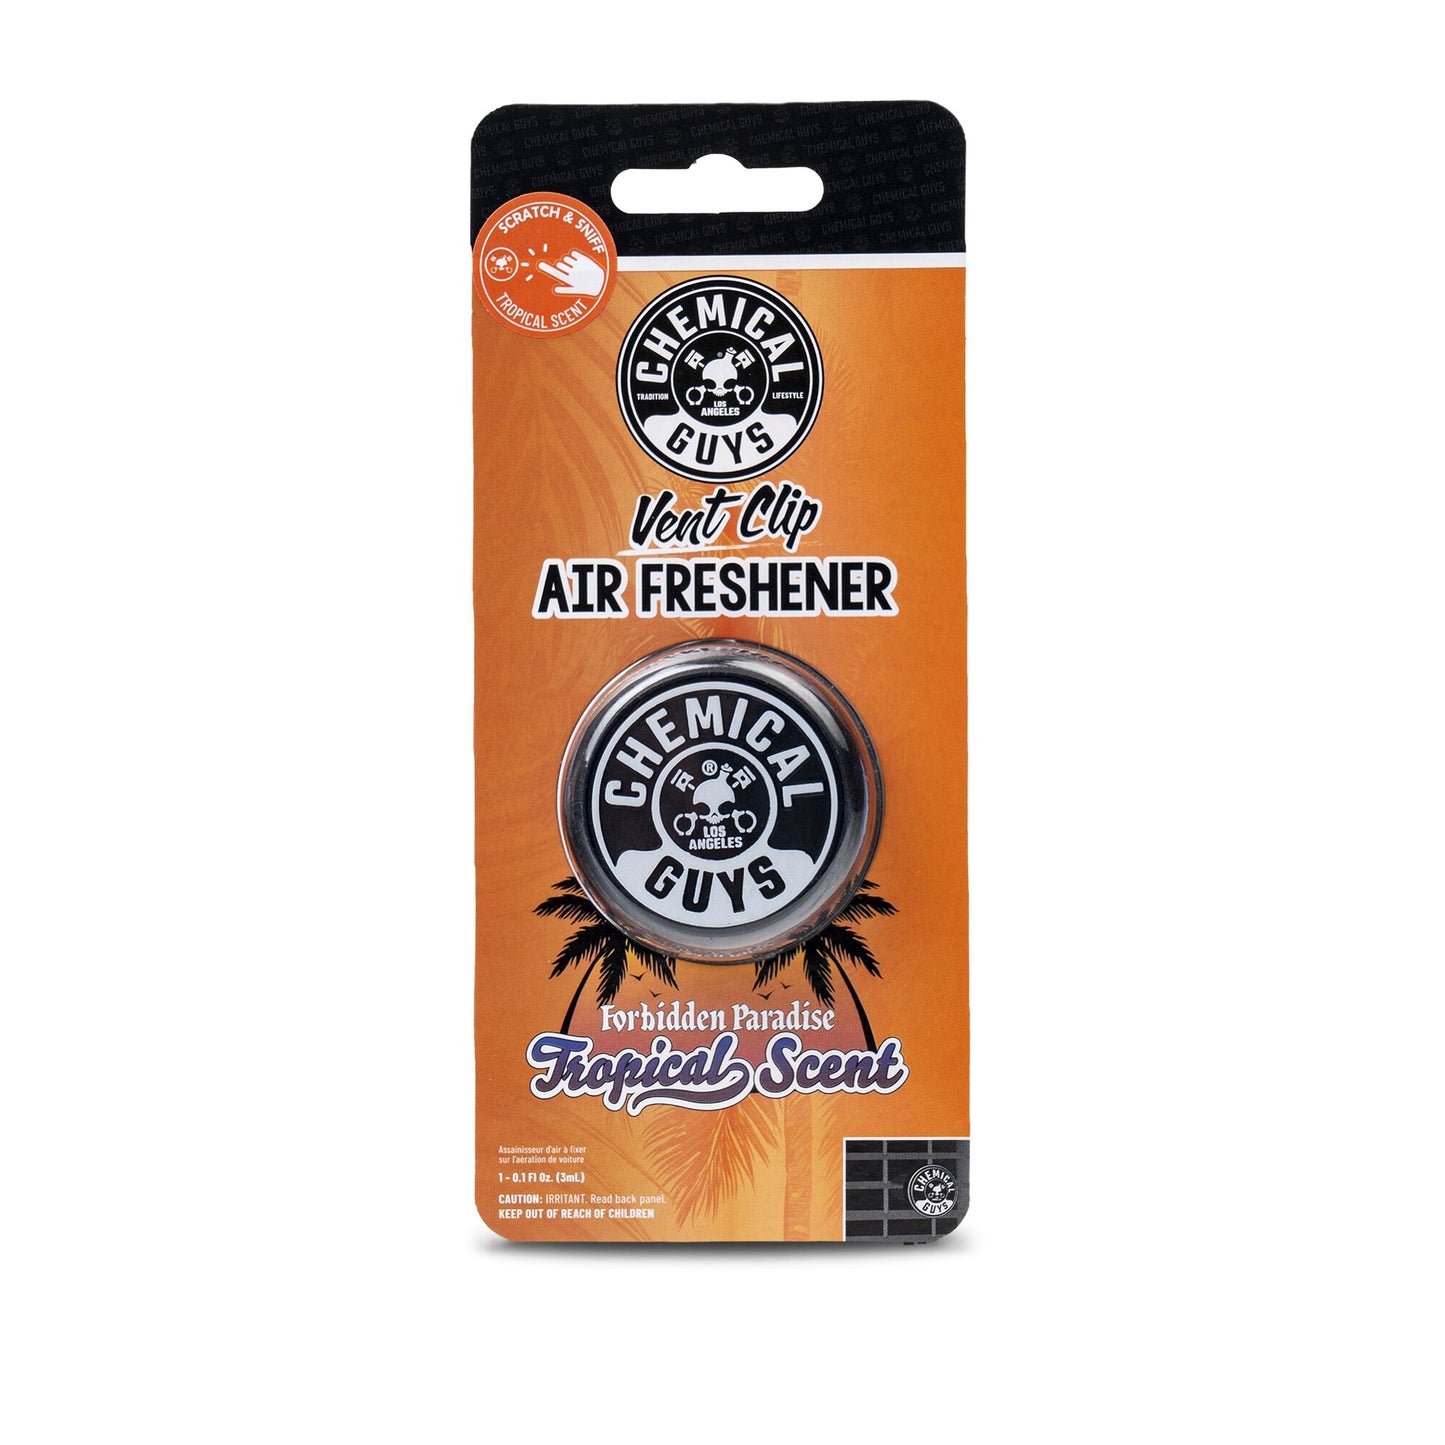 Vent Clip Air Freshener